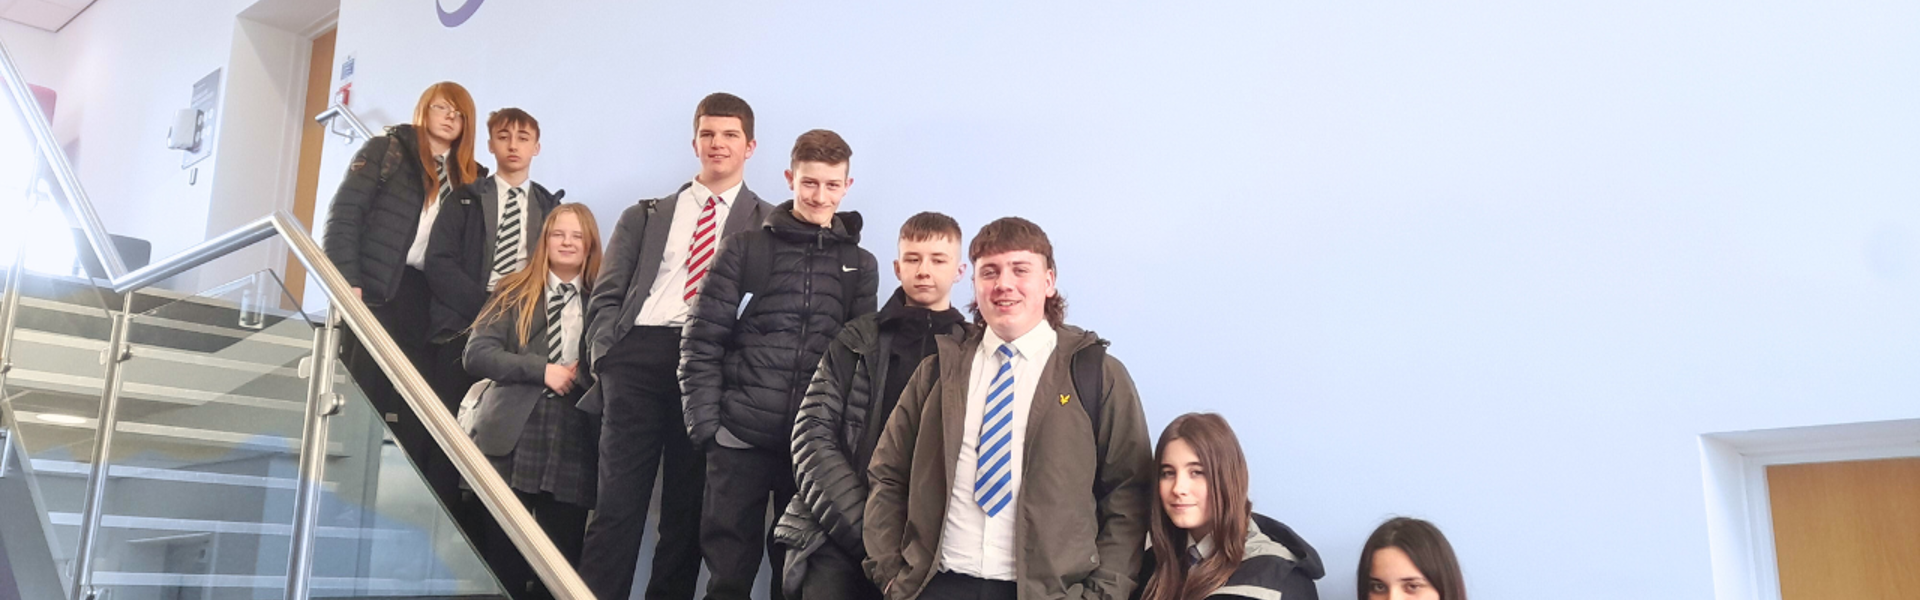 Monkwearmouth School Children On Steps At LCG Head Office